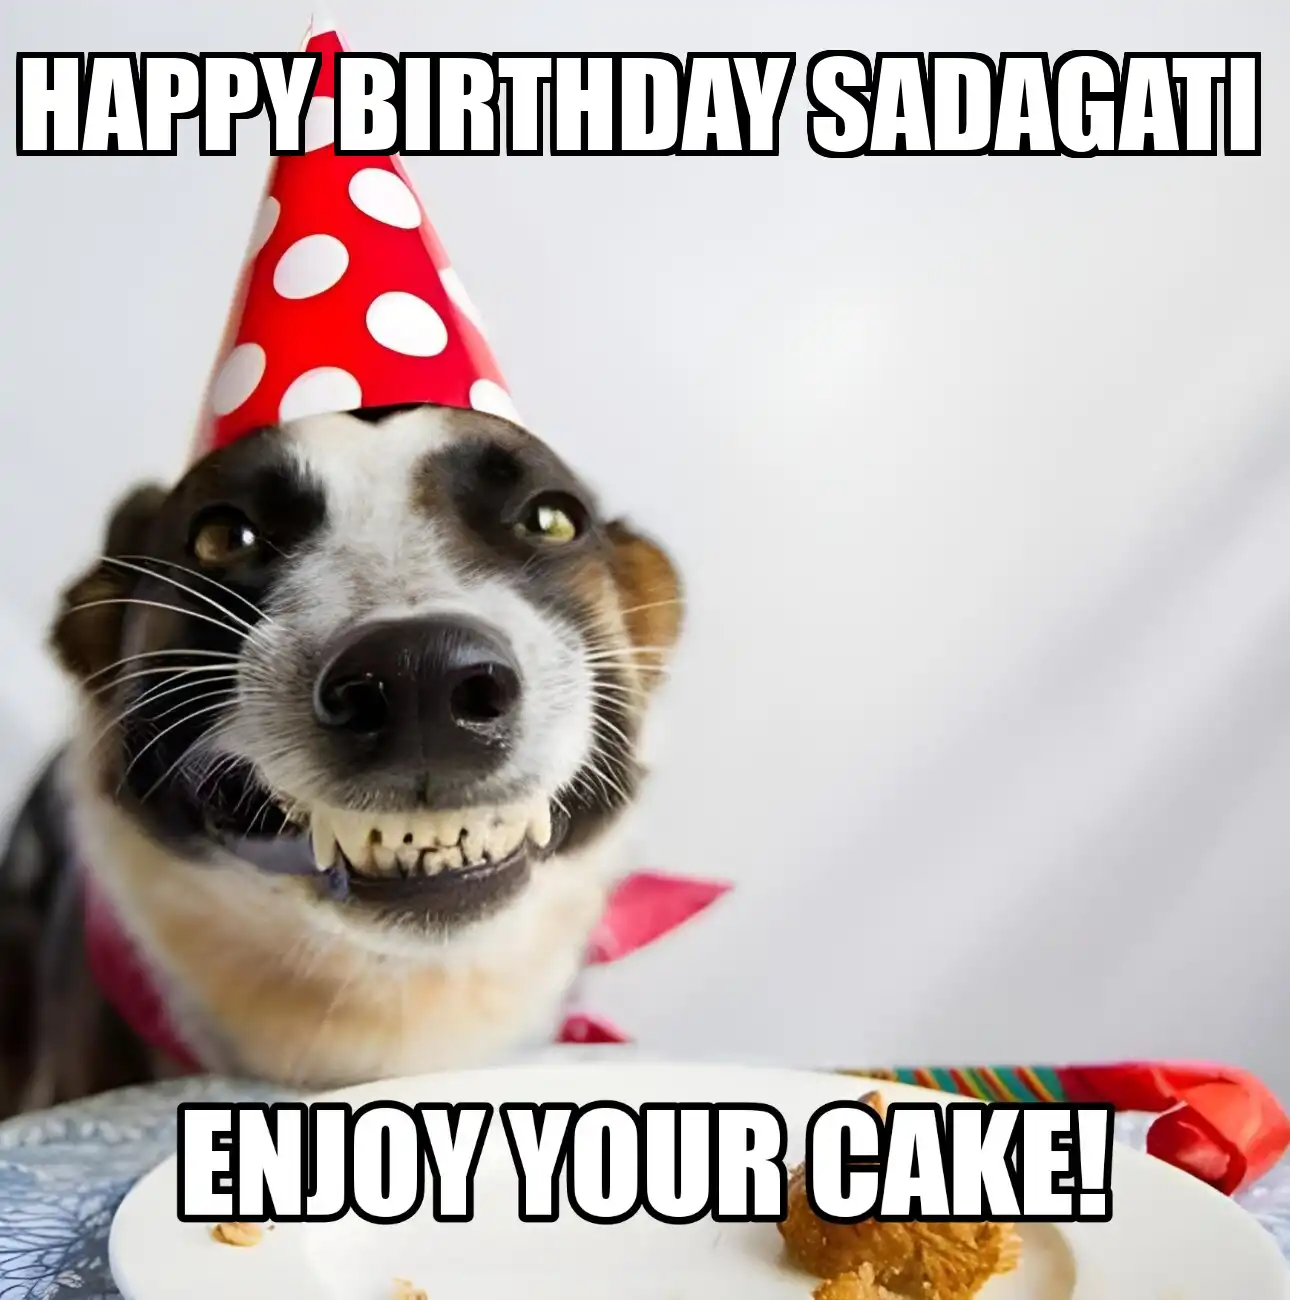 Happy Birthday Sadagati Enjoy Your Cake Dog Meme